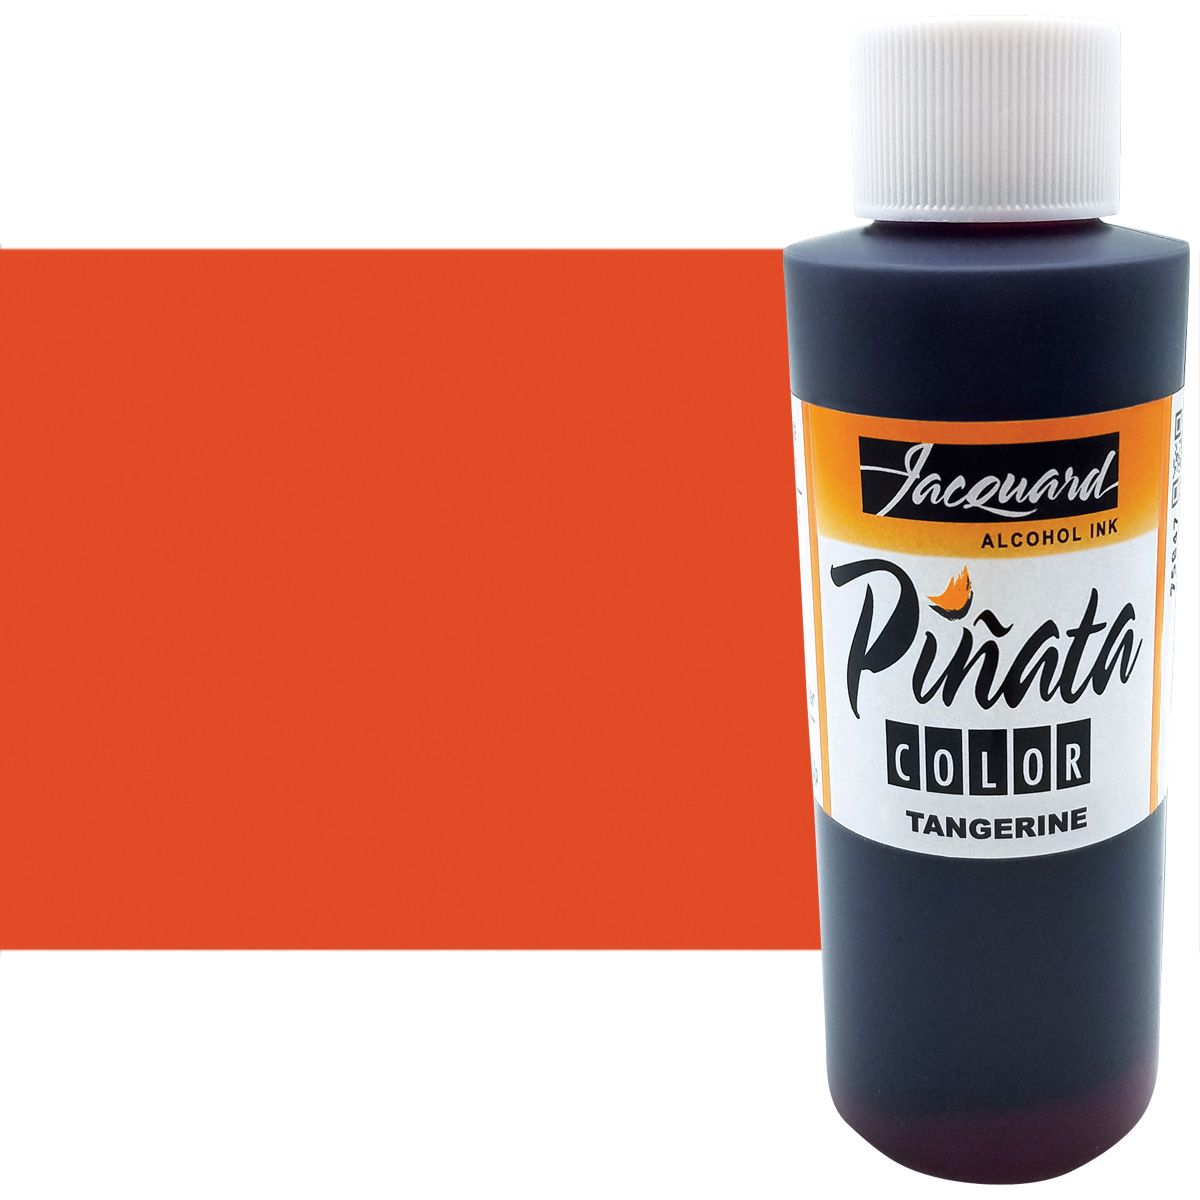 Jacquard Pinata Alcohol Ink - Tangerine, 1/2oz